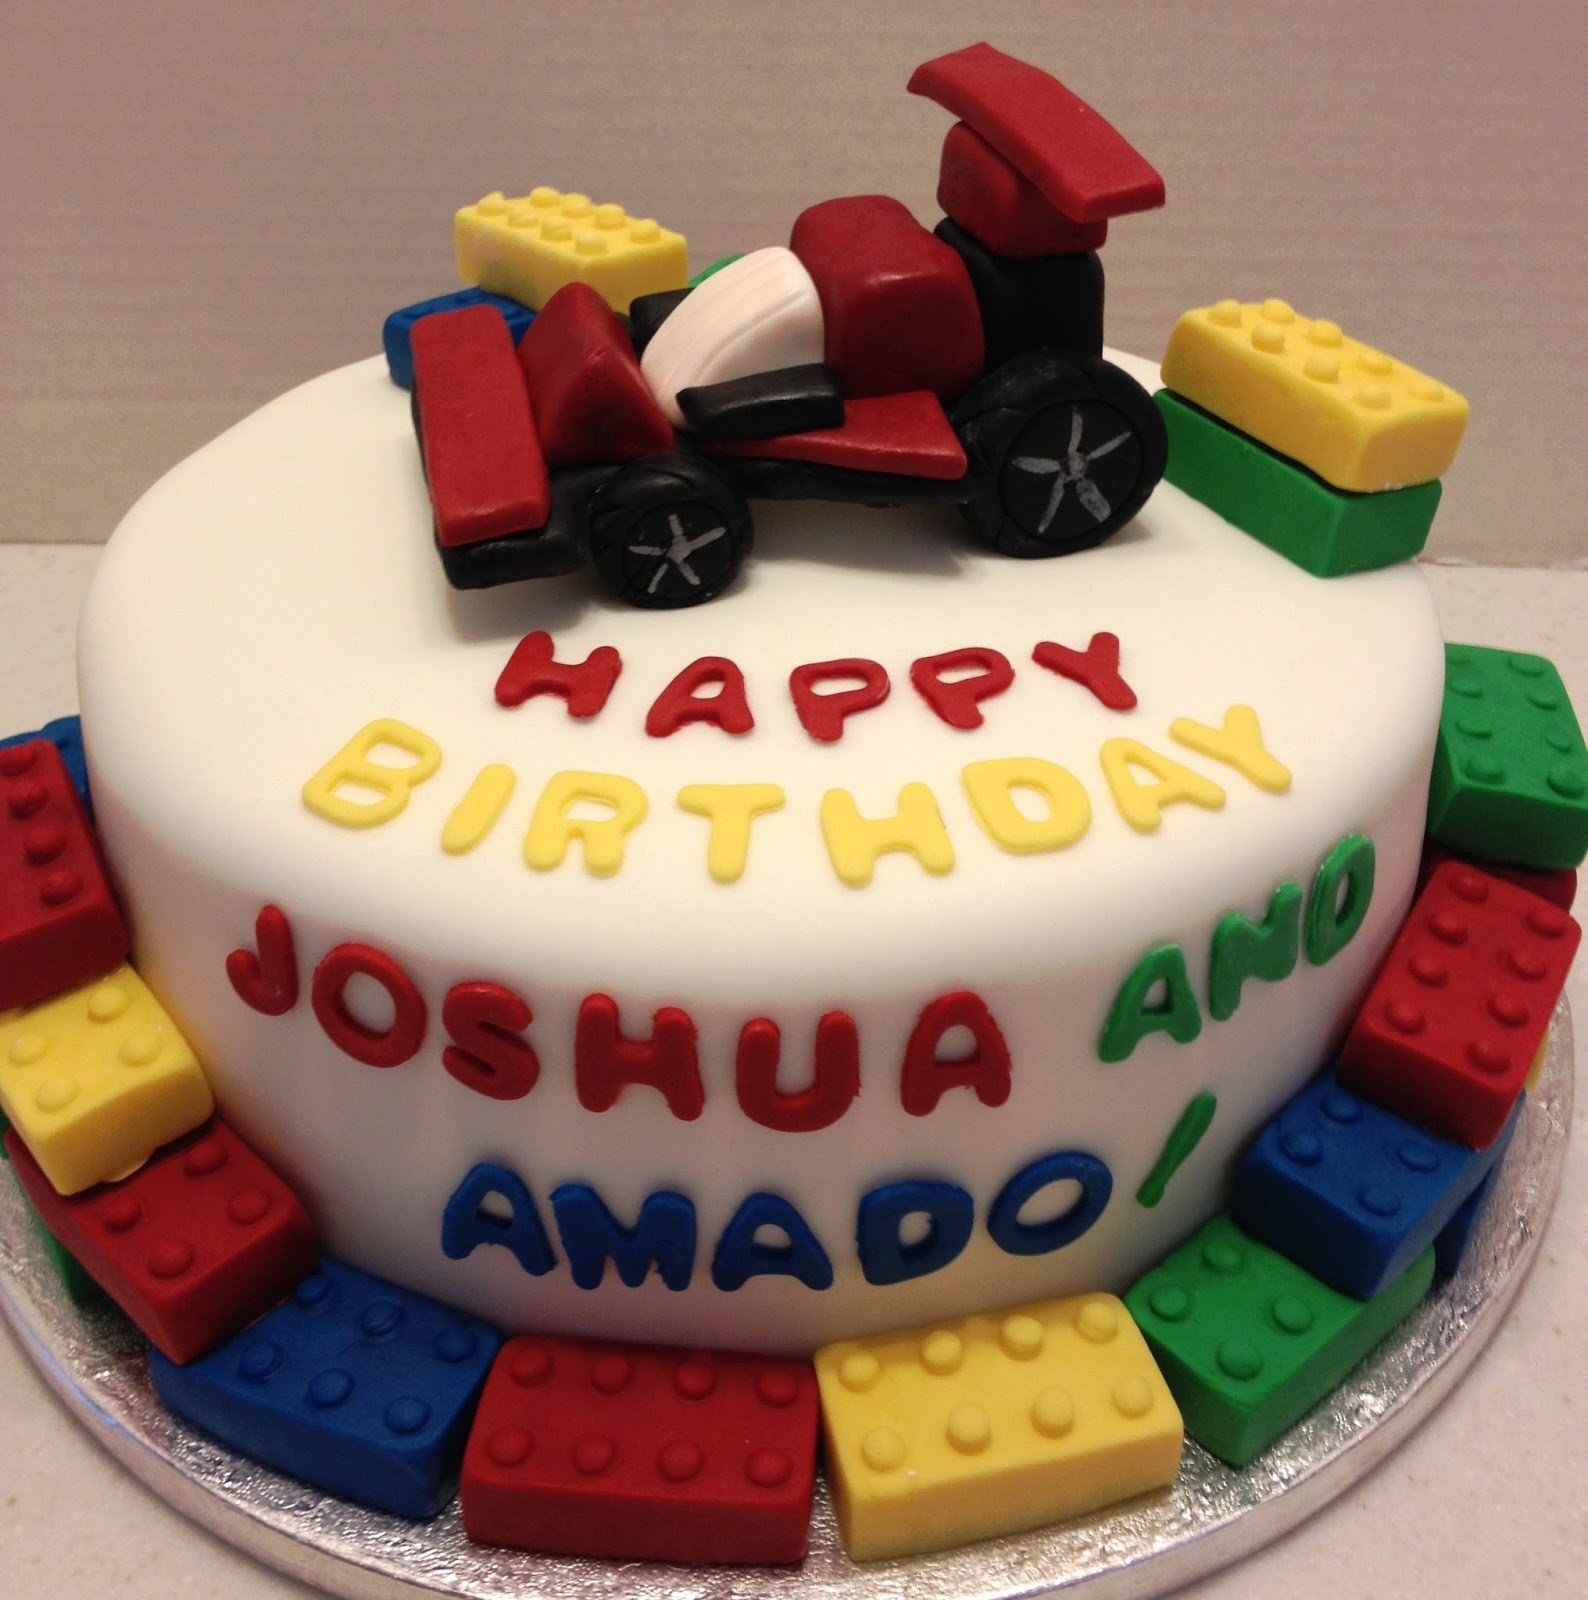 Best ideas about Lego Birthday Cake
. Save or Pin MaryMel Cakes Lego Birthday Now.